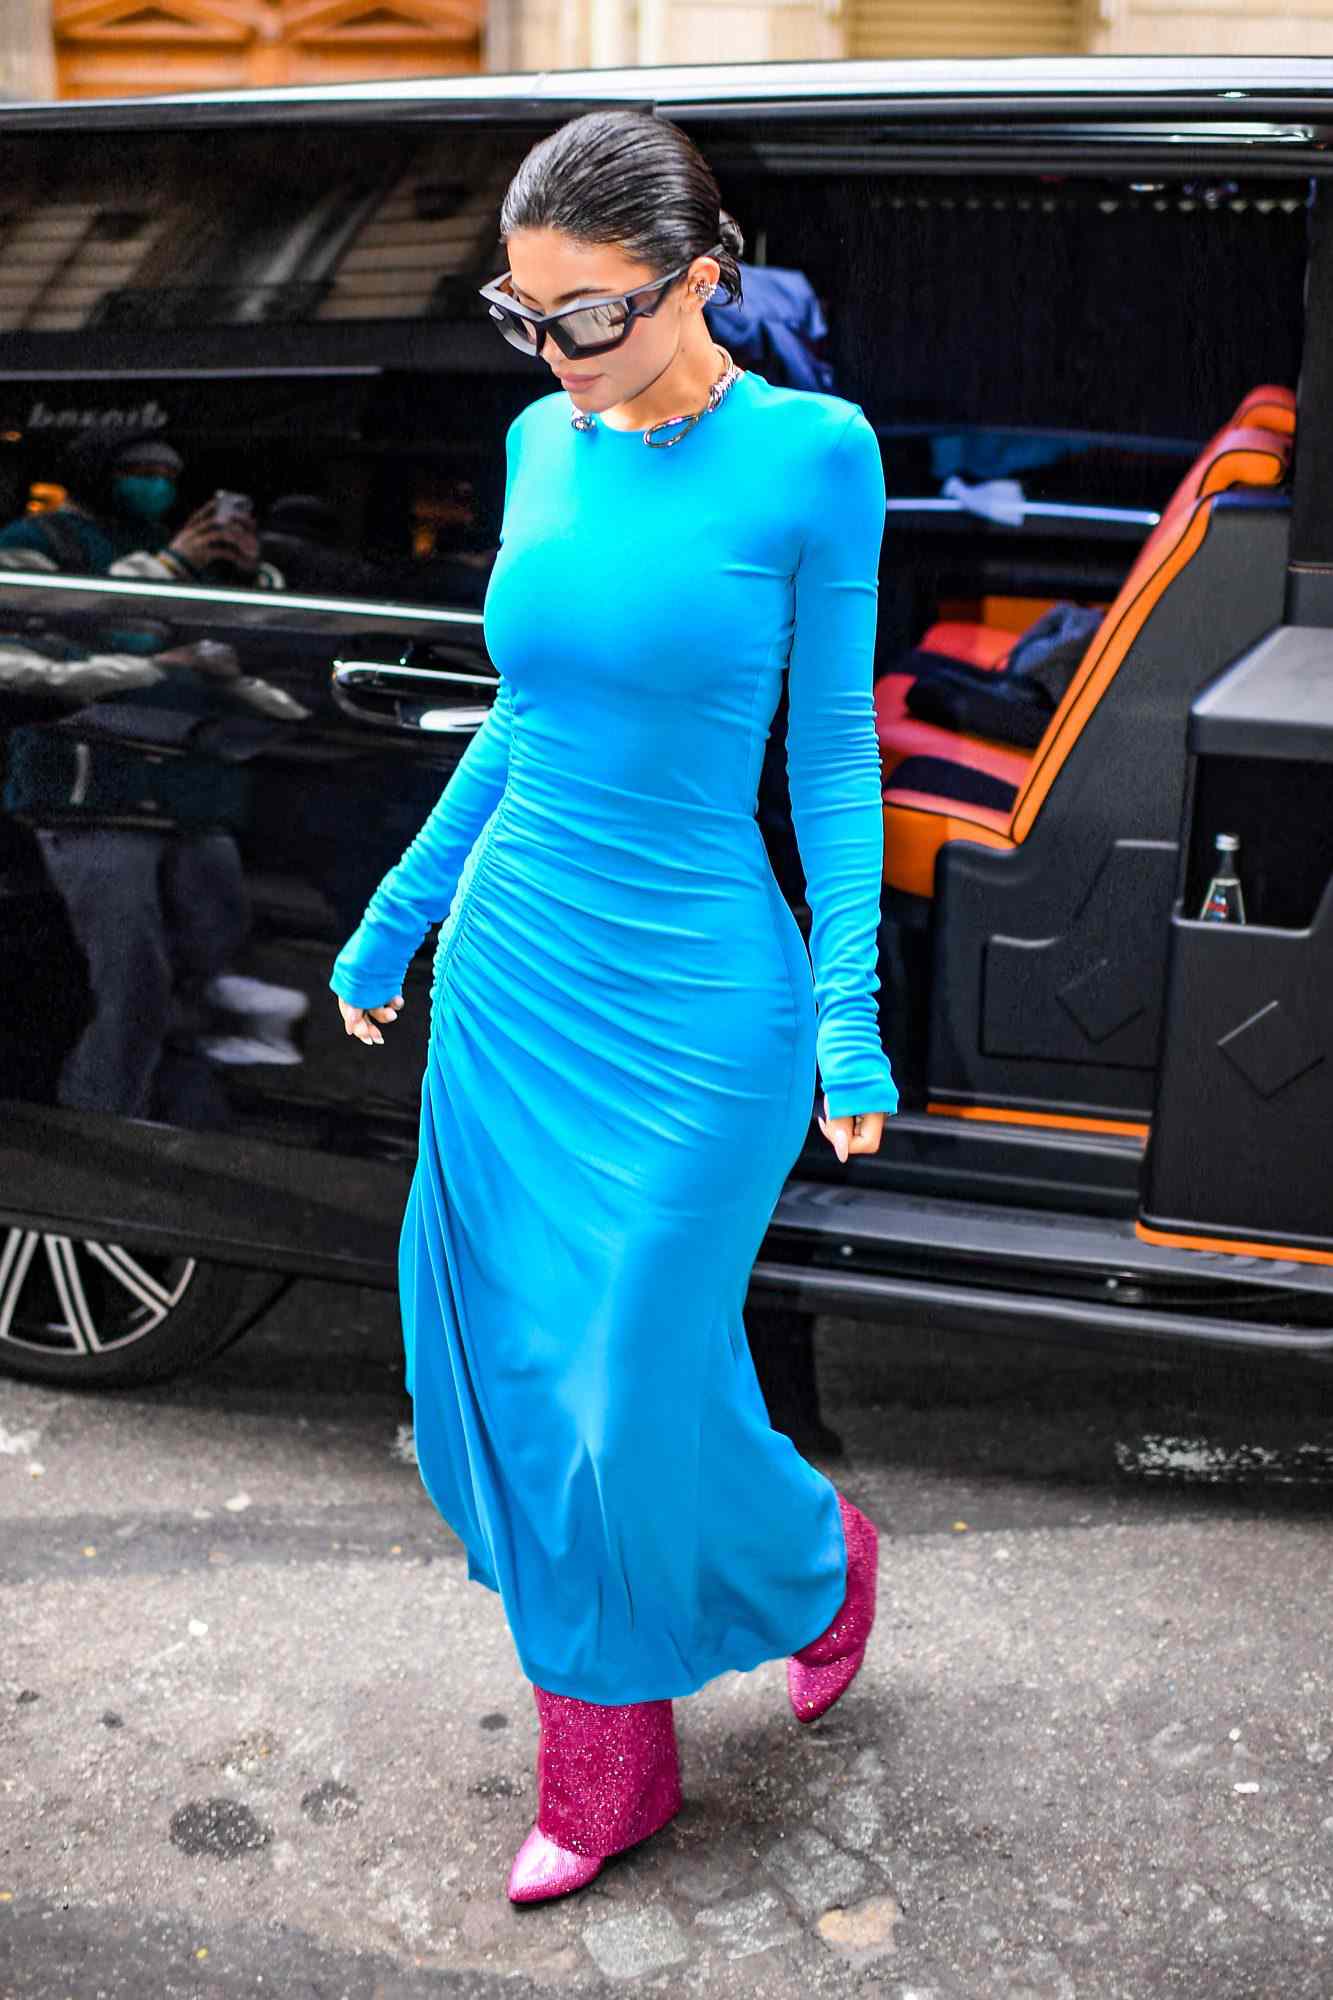 <p>Para asistir a un desfile de moda en París, la empresaria eligió este ceñido vestido azul turquesa de manga larga y botas fucsia de brillo.</p>
                            